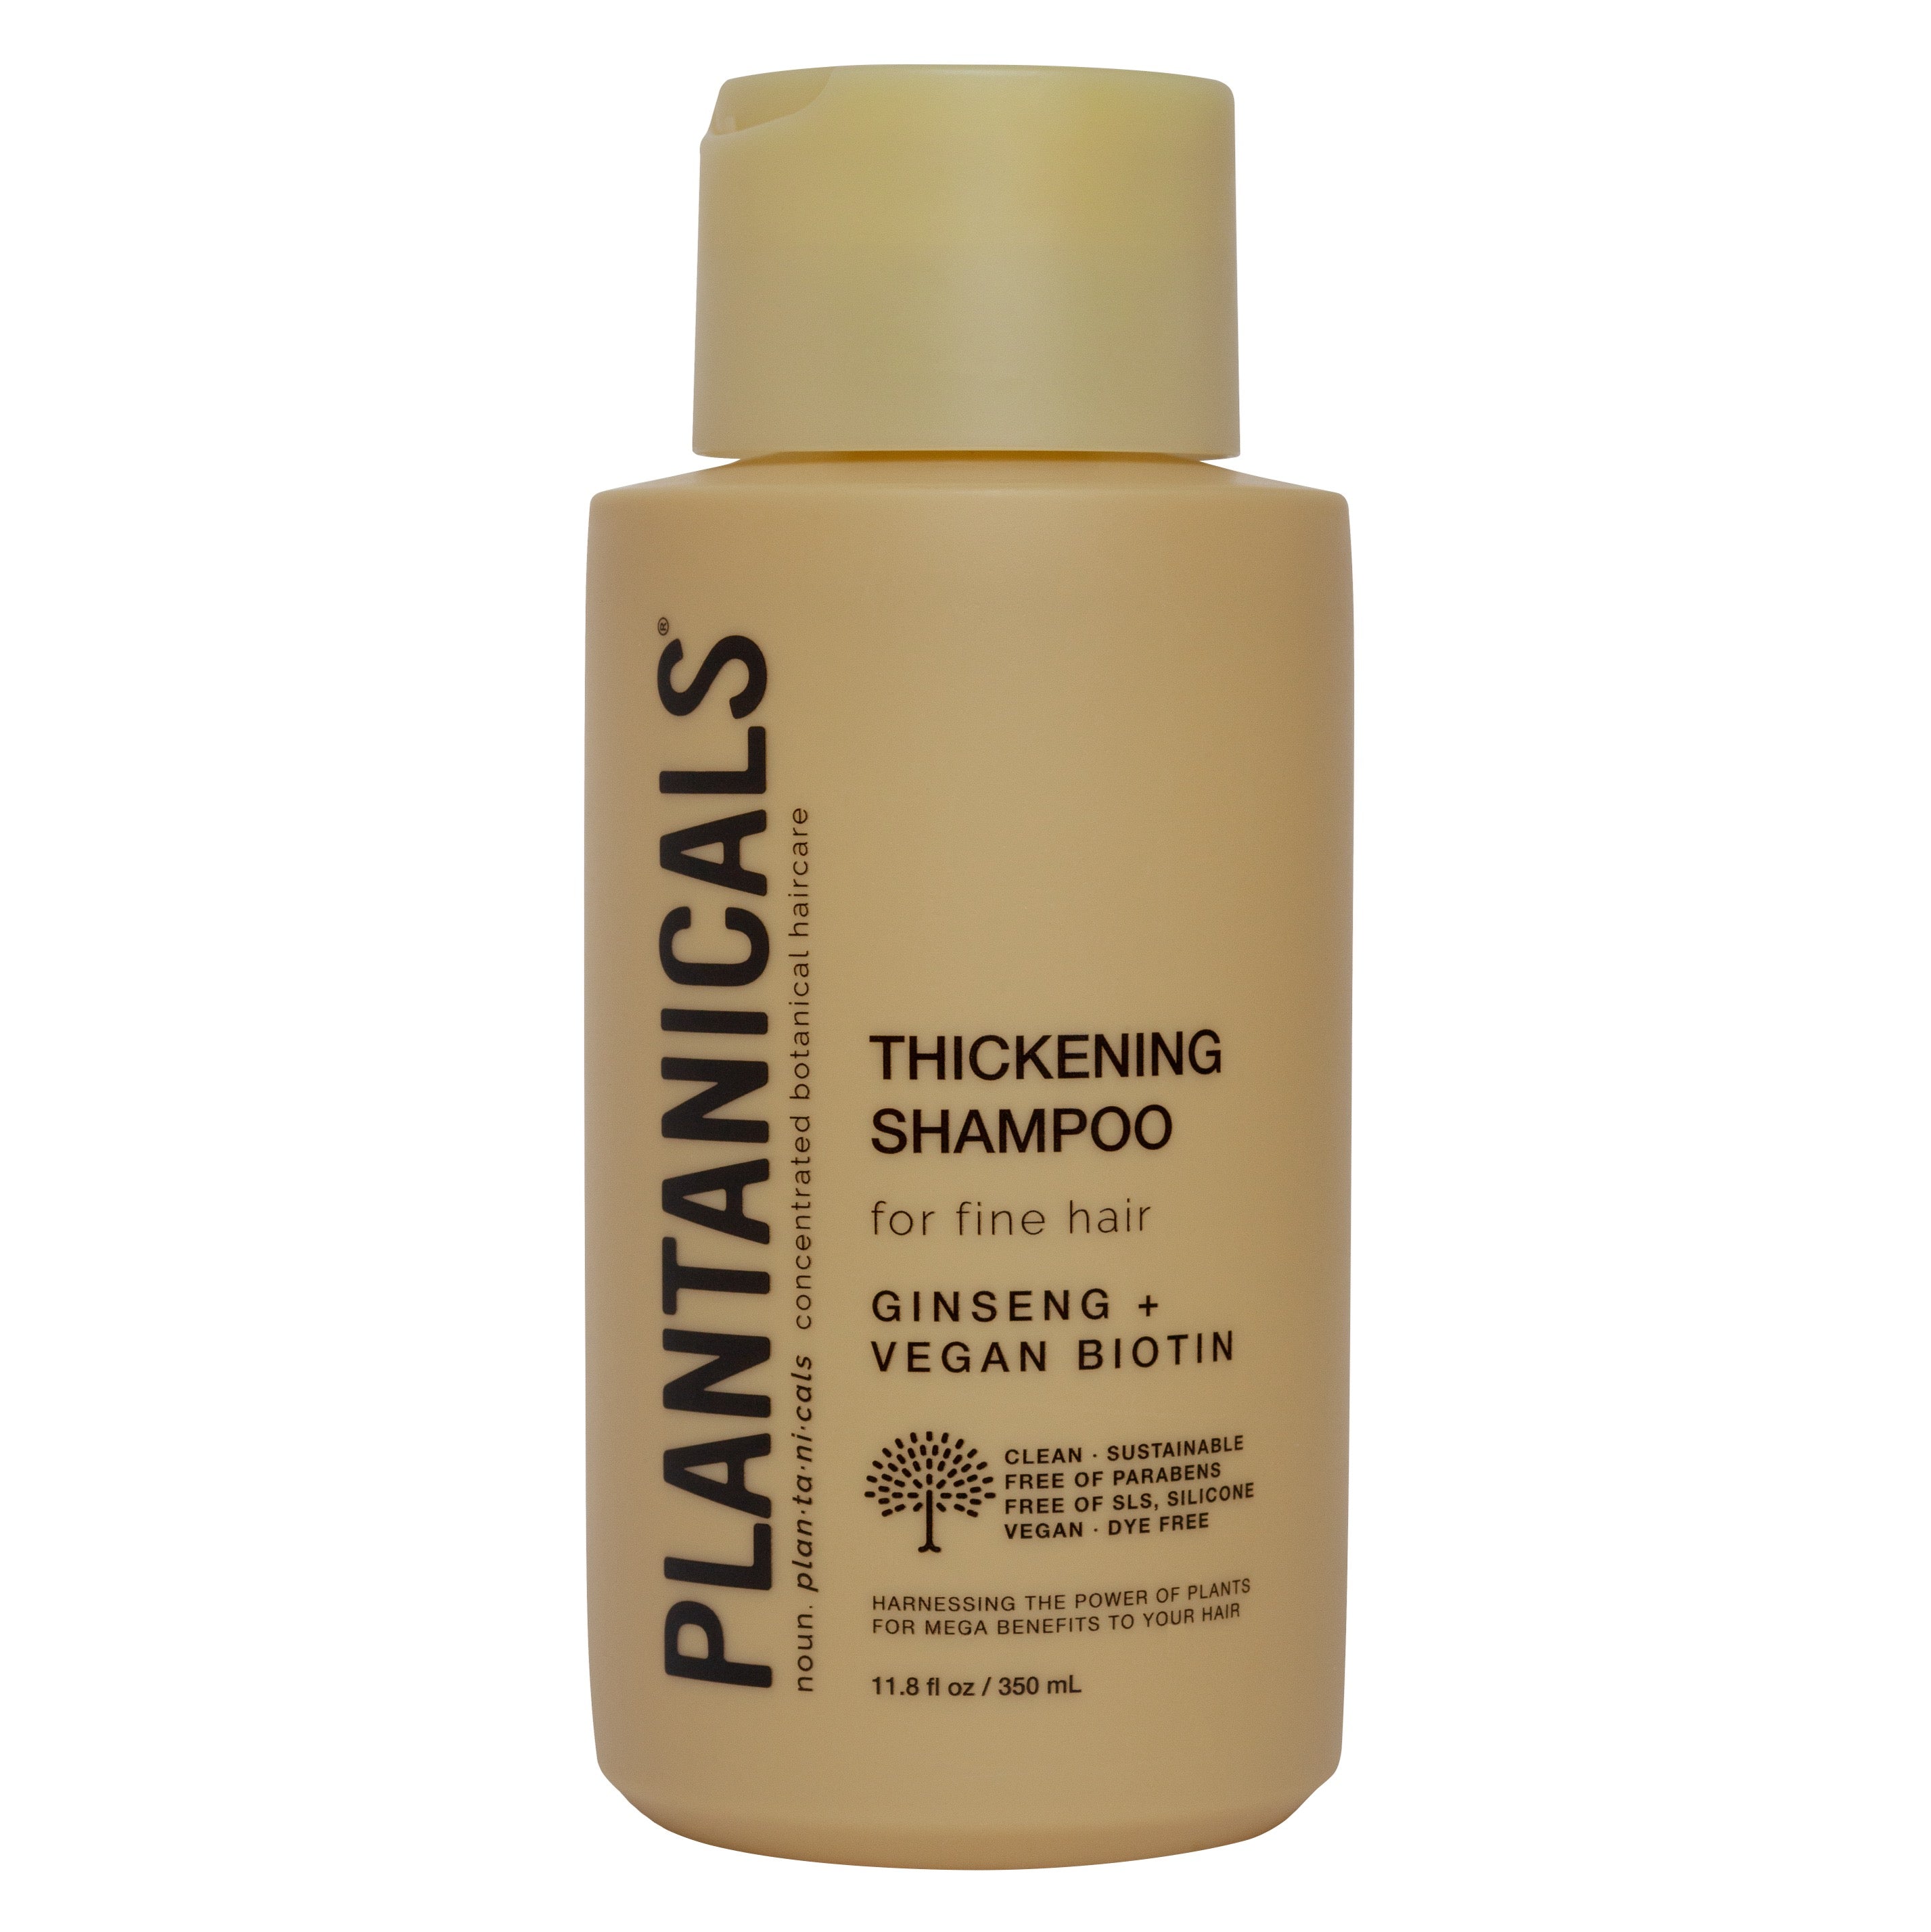 *New & Improved* Thickening Shampoo